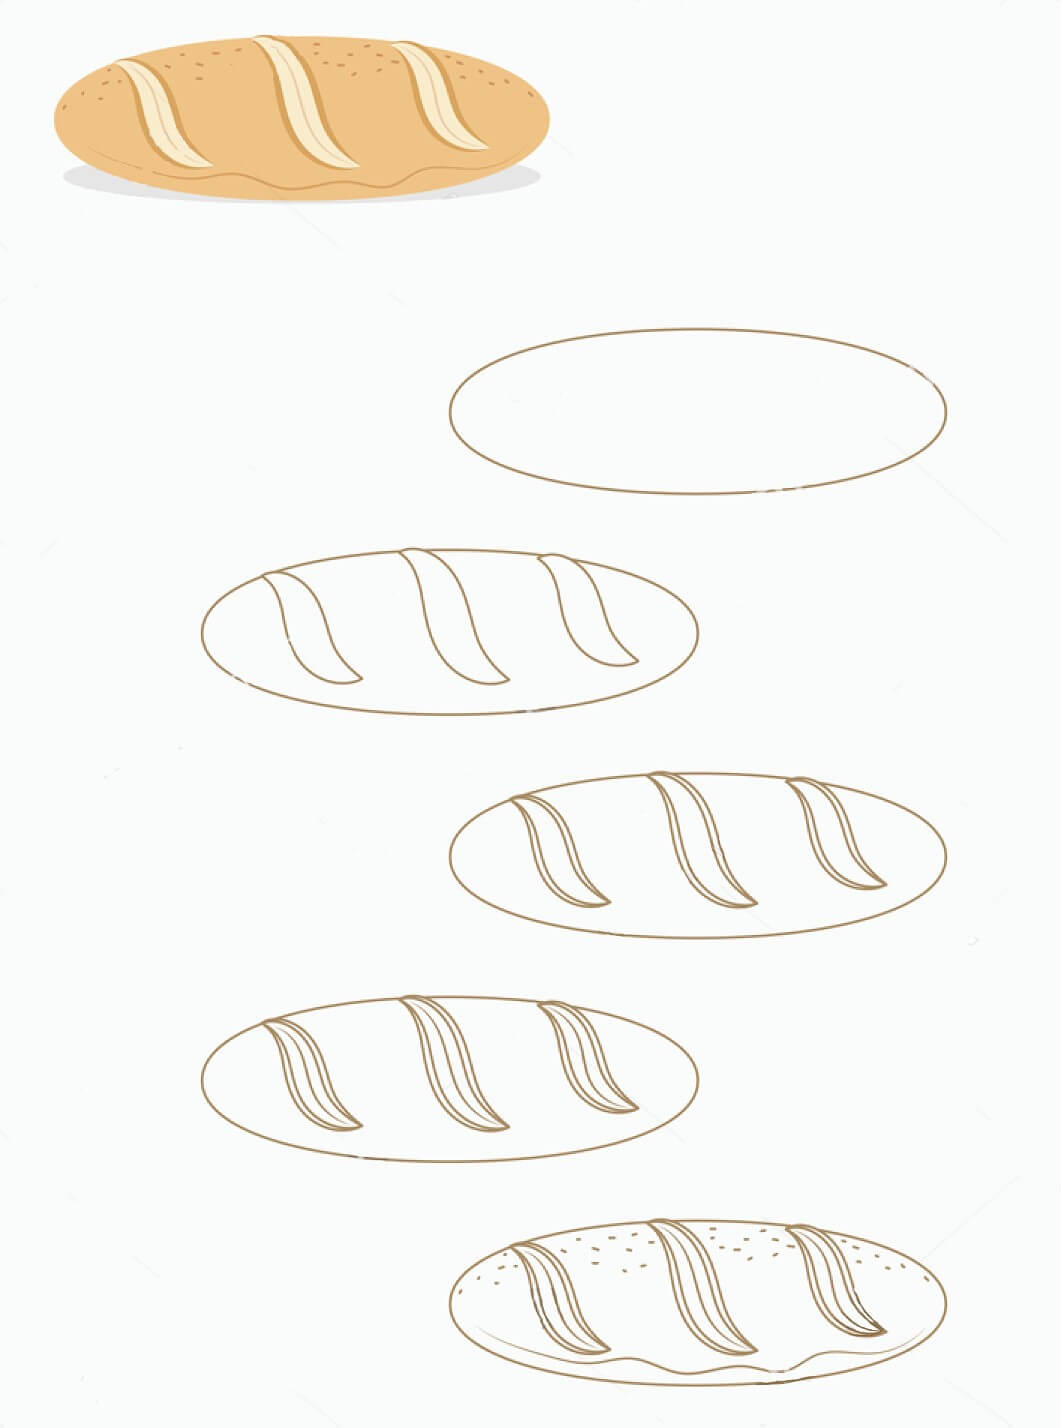 Ekmek fikri (10) çizimi